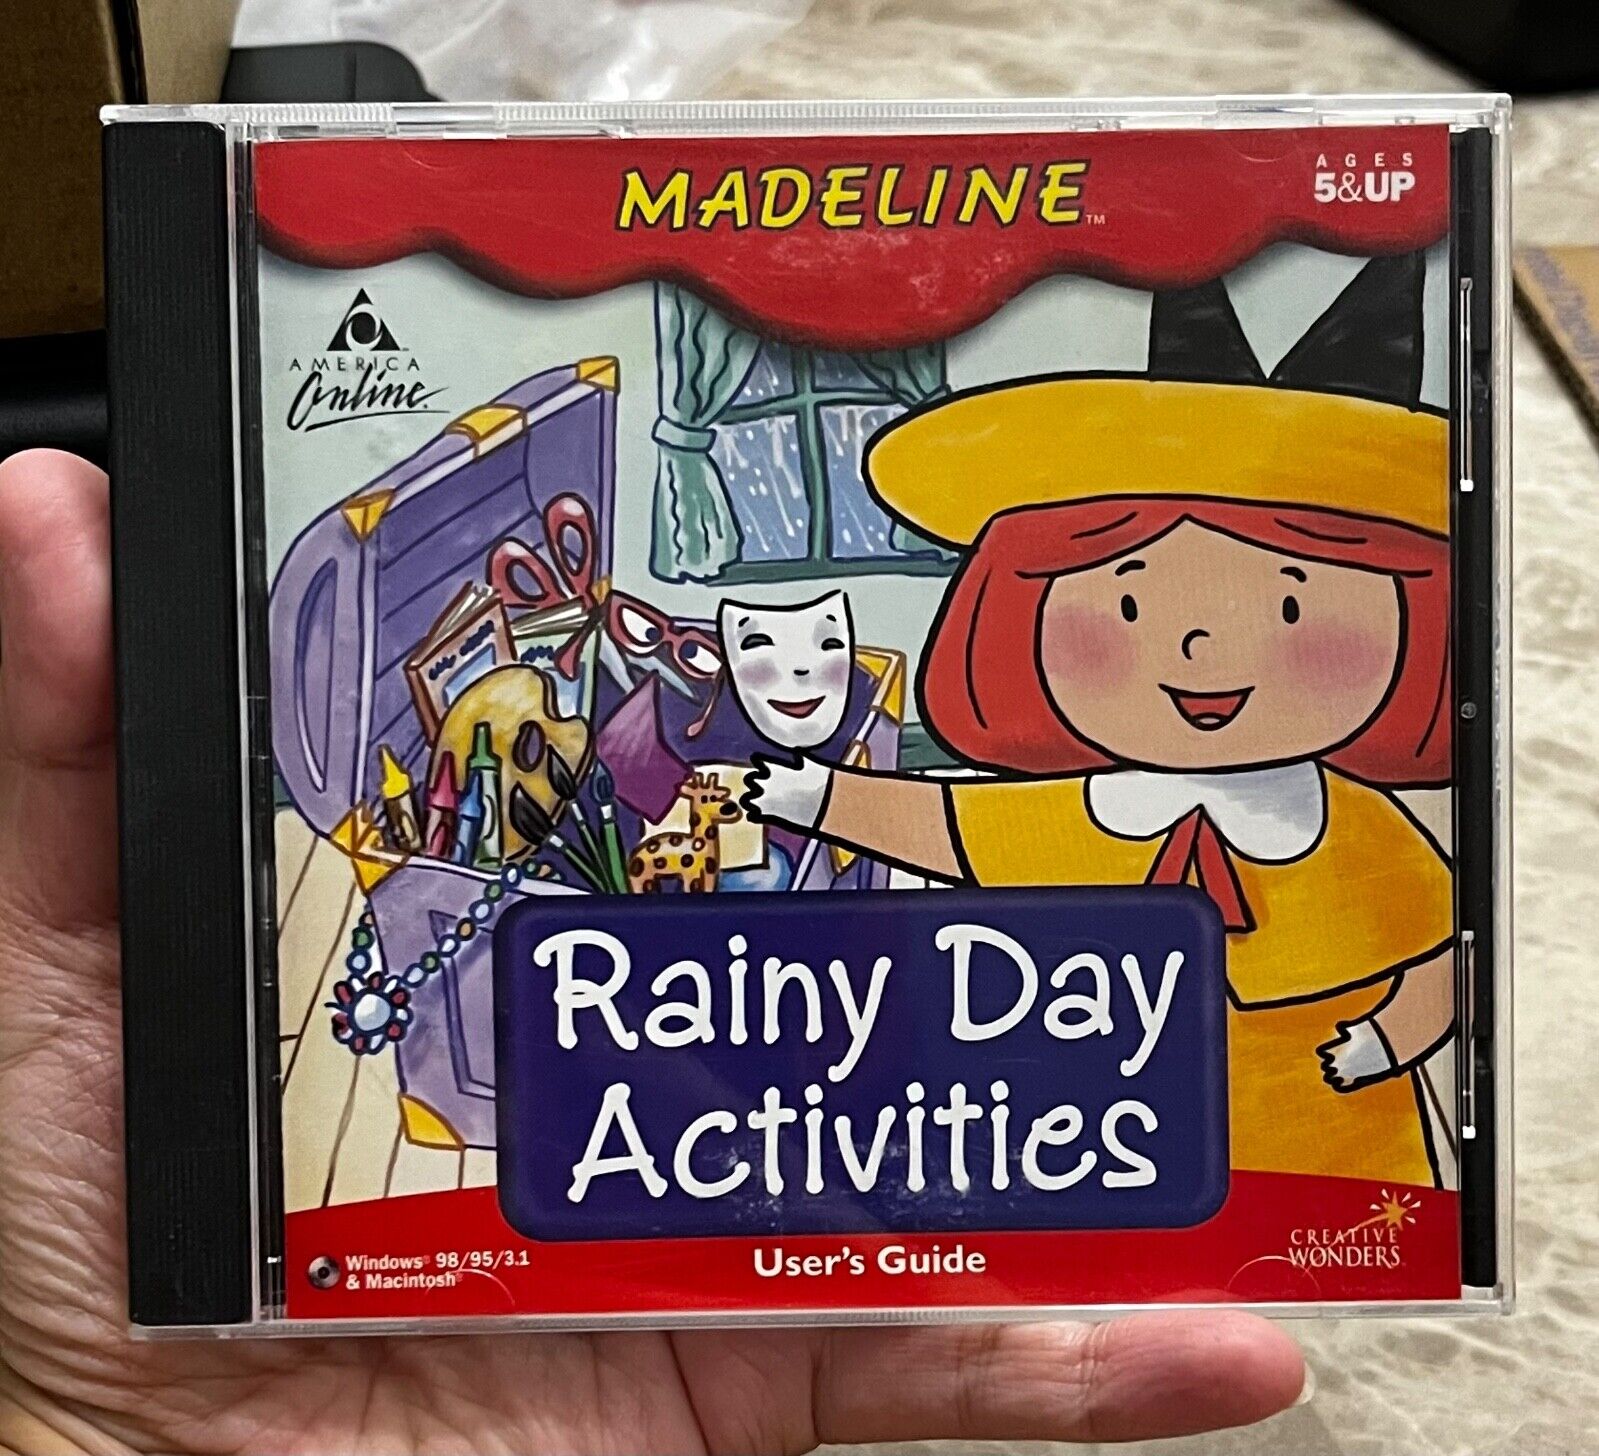 Madeline; Rainy Day Activities. Windows 95/98/3.1 & Macintosh CD-Rom. Excellent